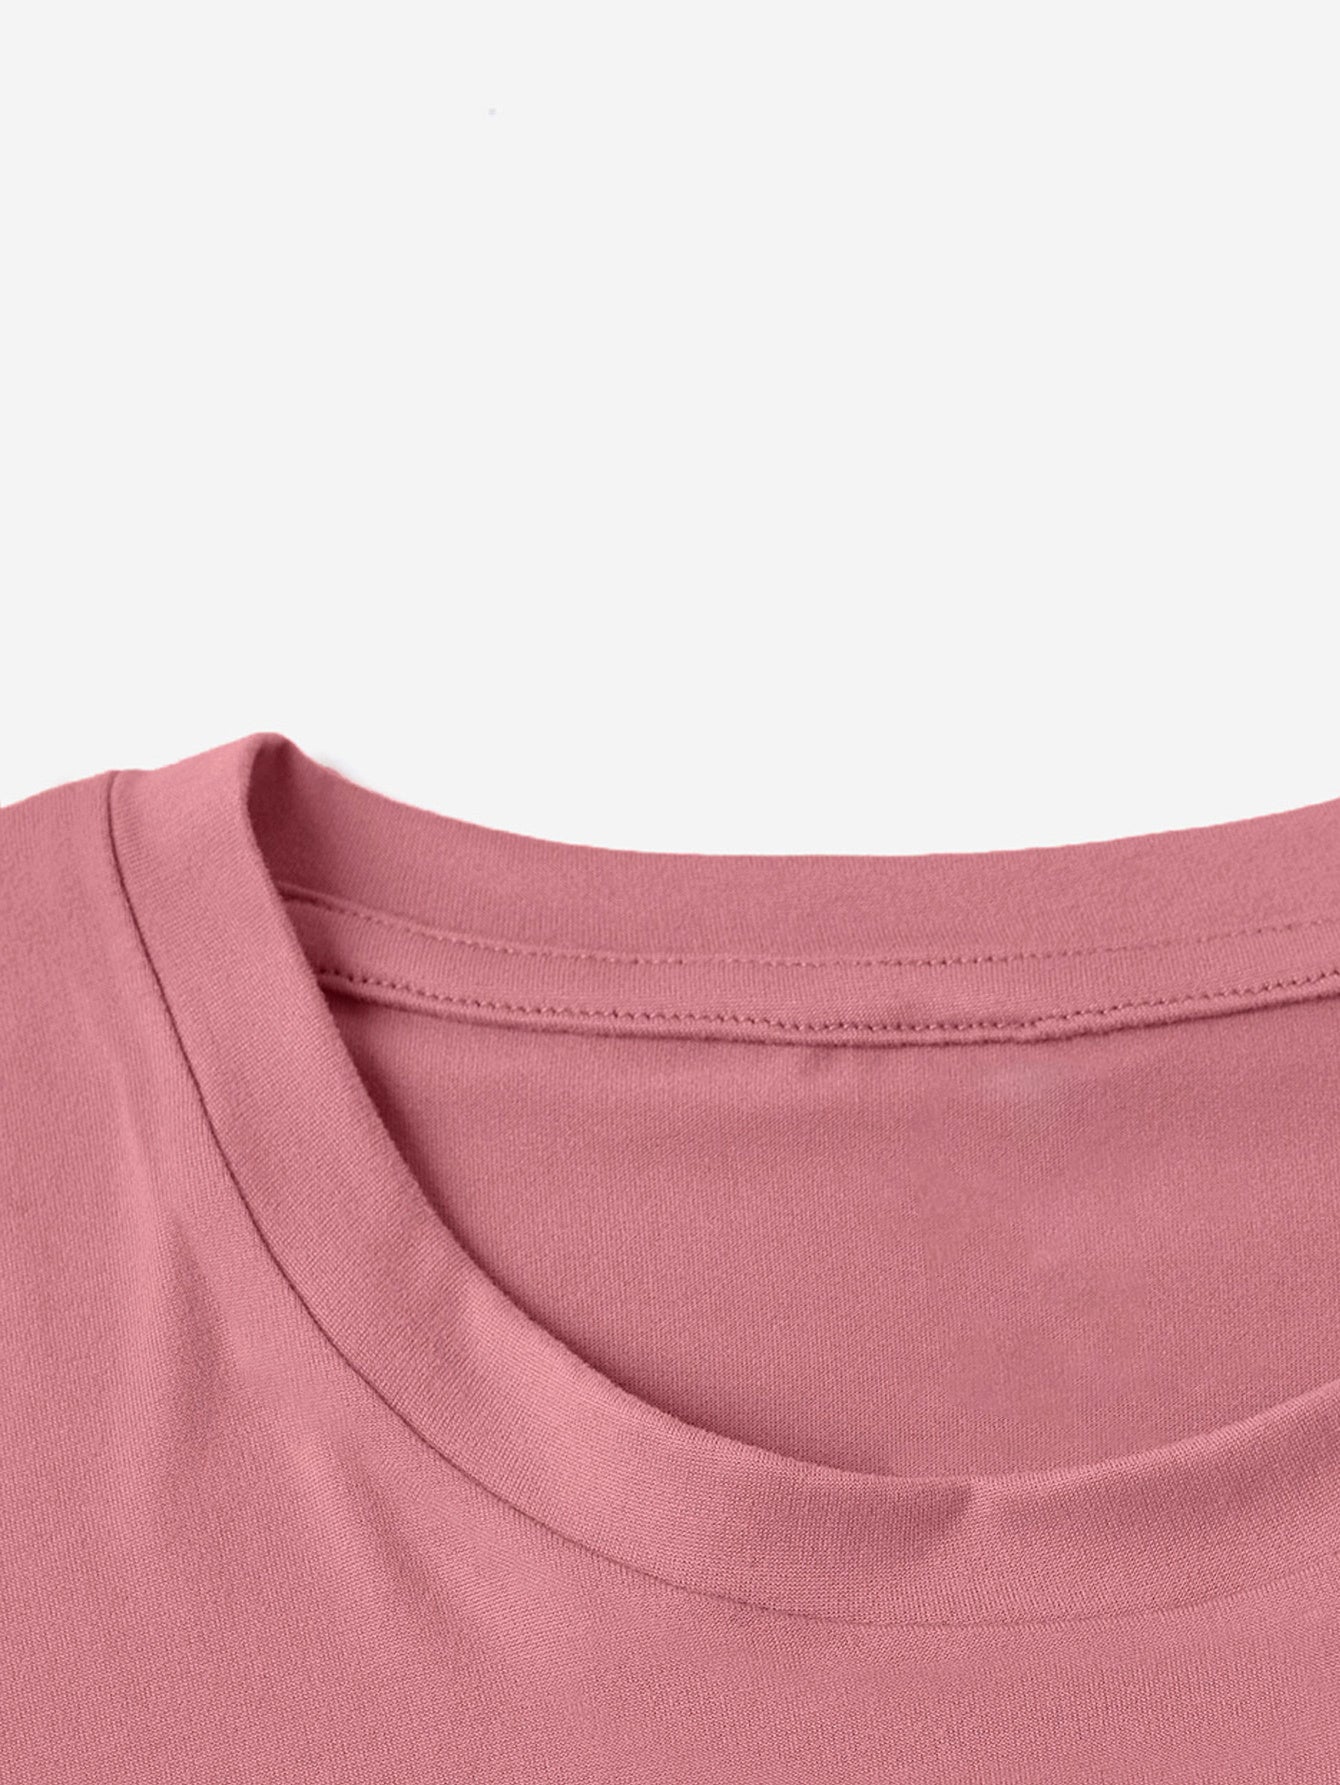 Rabbit Round Neck Short Sleeve T-Shirt  - 4 colors